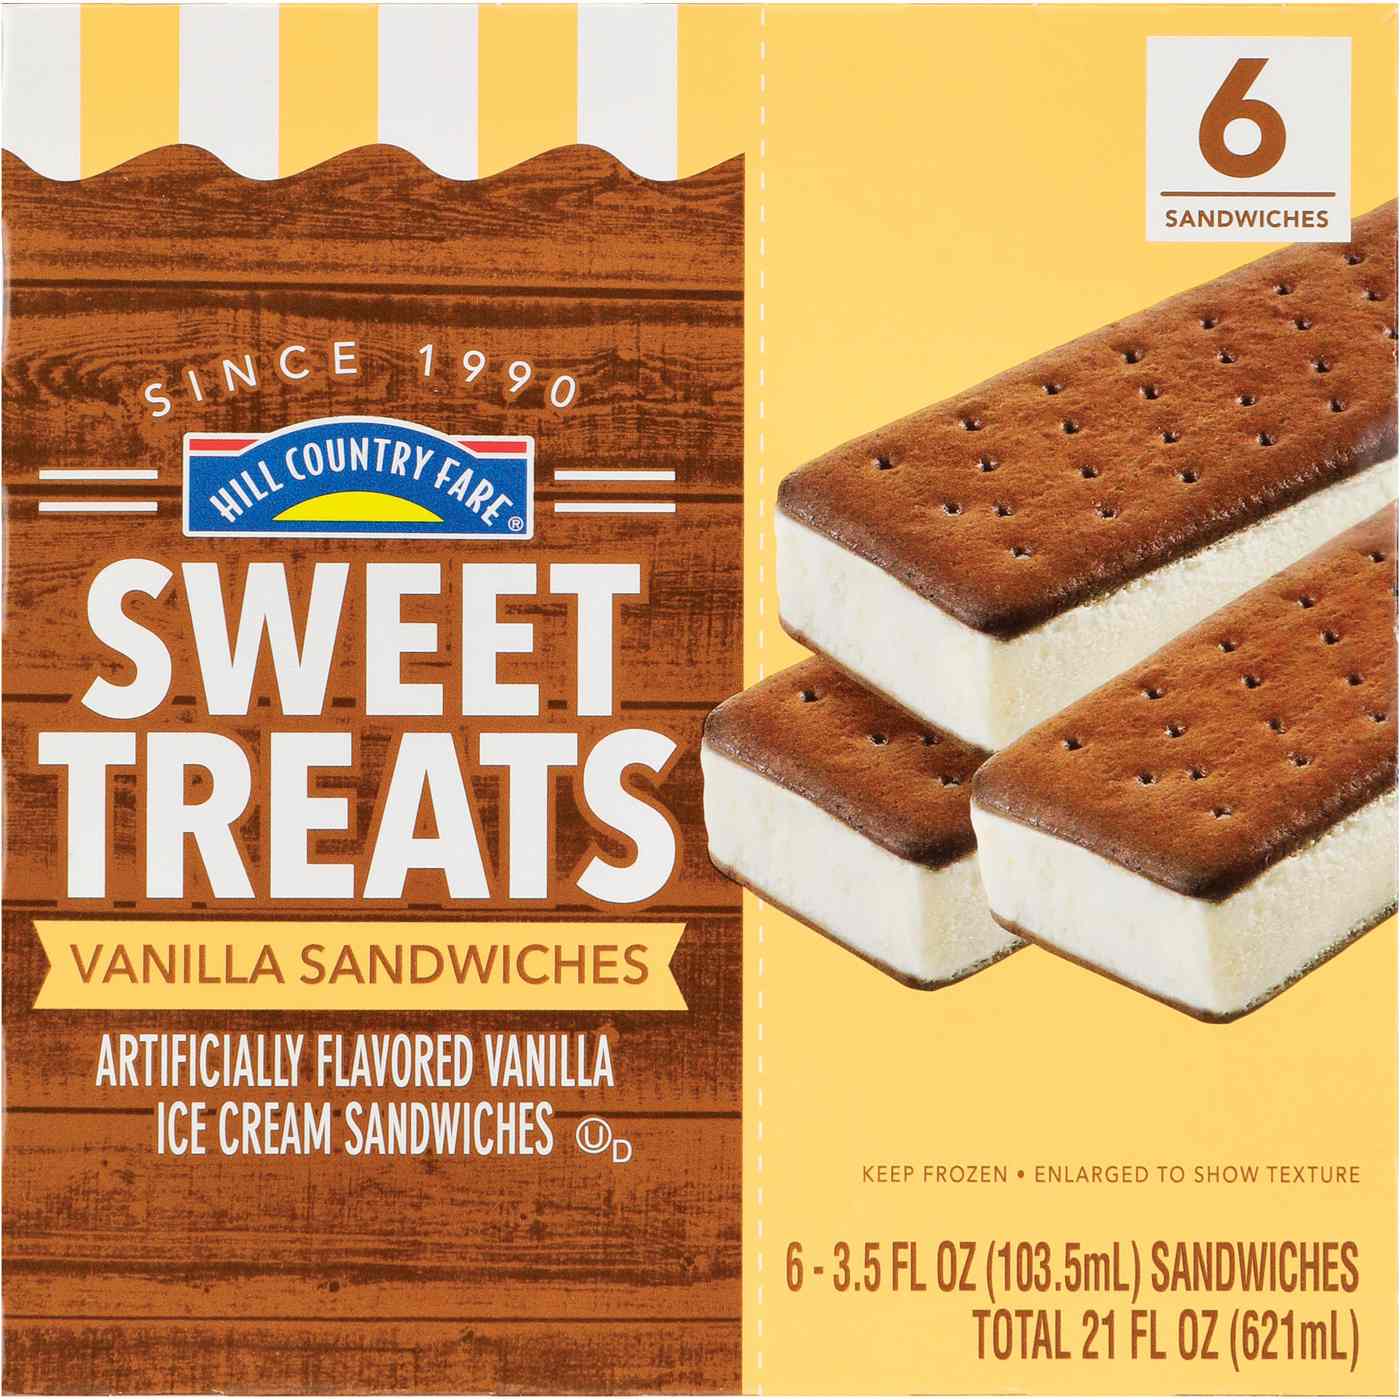 Hill Country Fare Sweet Treats Vanilla Ice Cream Sandwiches; image 1 of 2